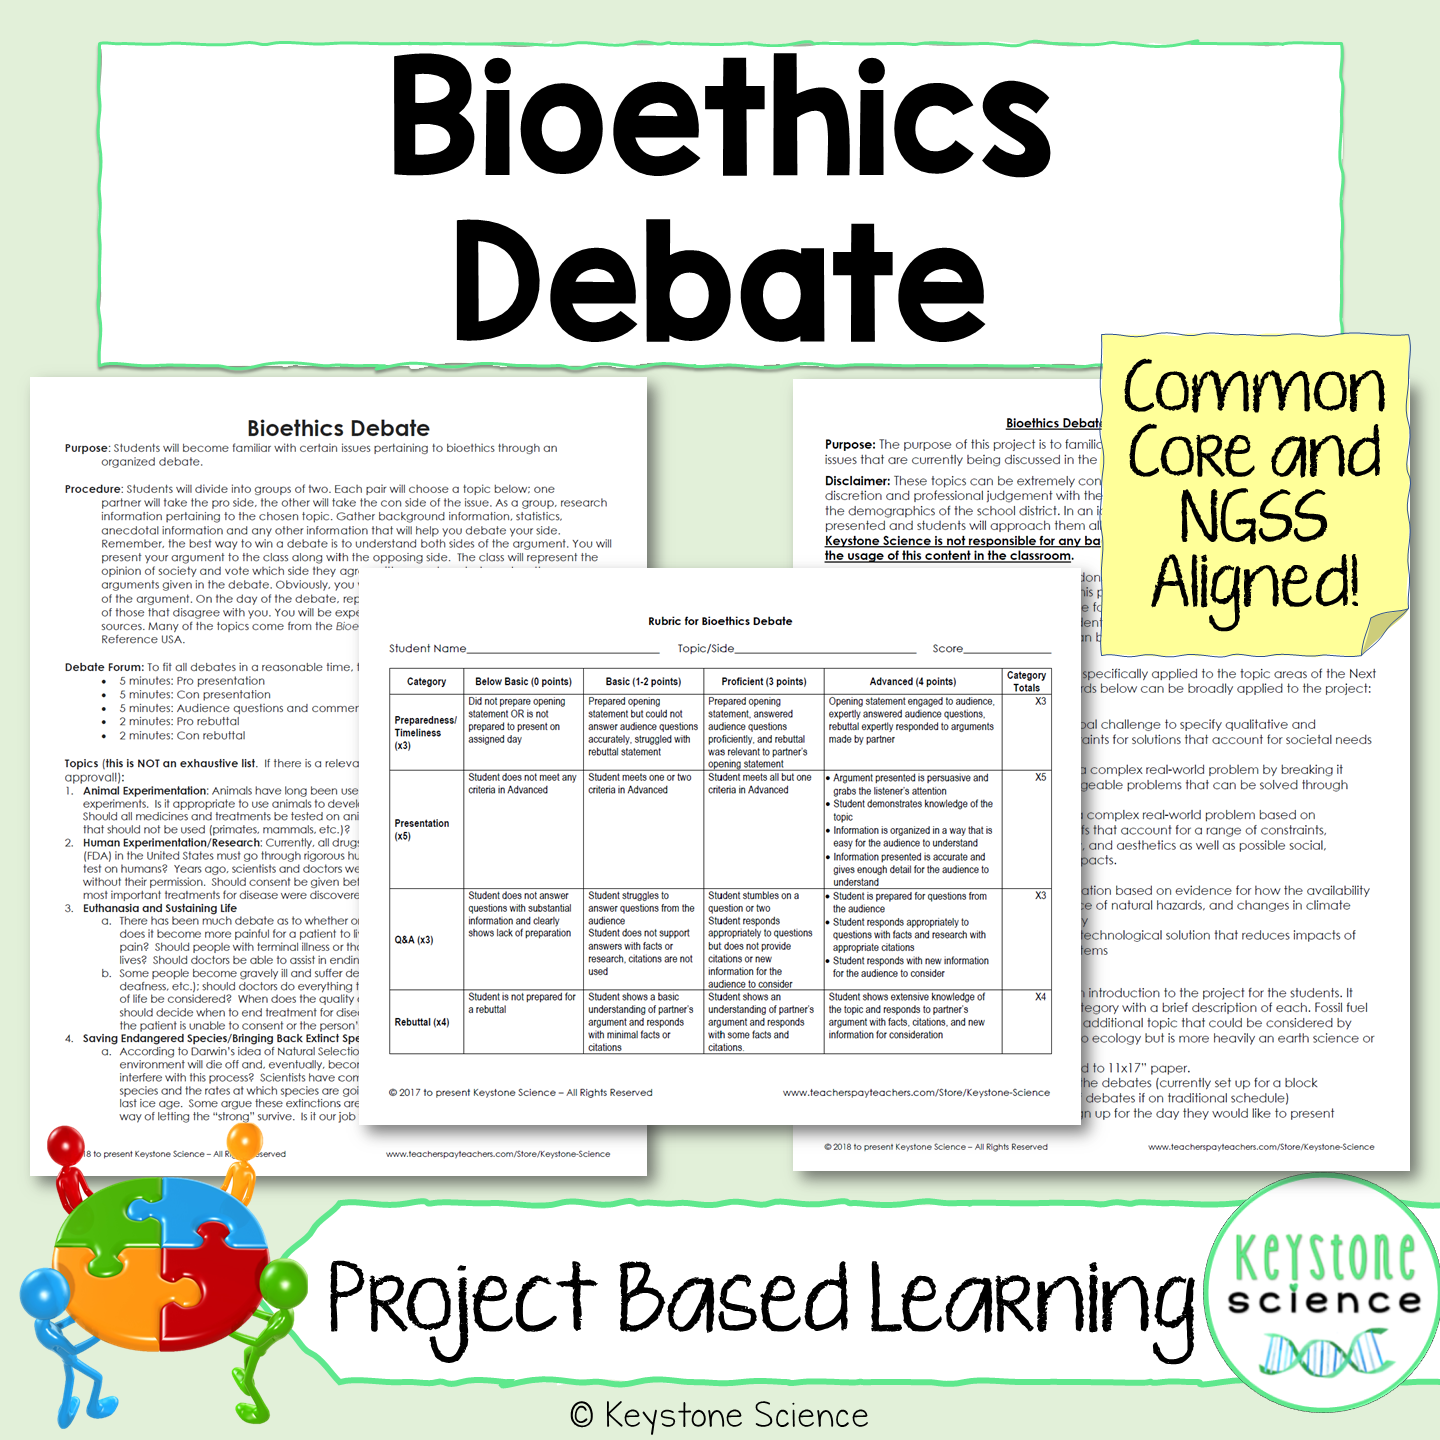 Ecology　PBL　Evolution　Science　Debate　Learning　Bioethics　Based　Project　Keystone　Genetics　–